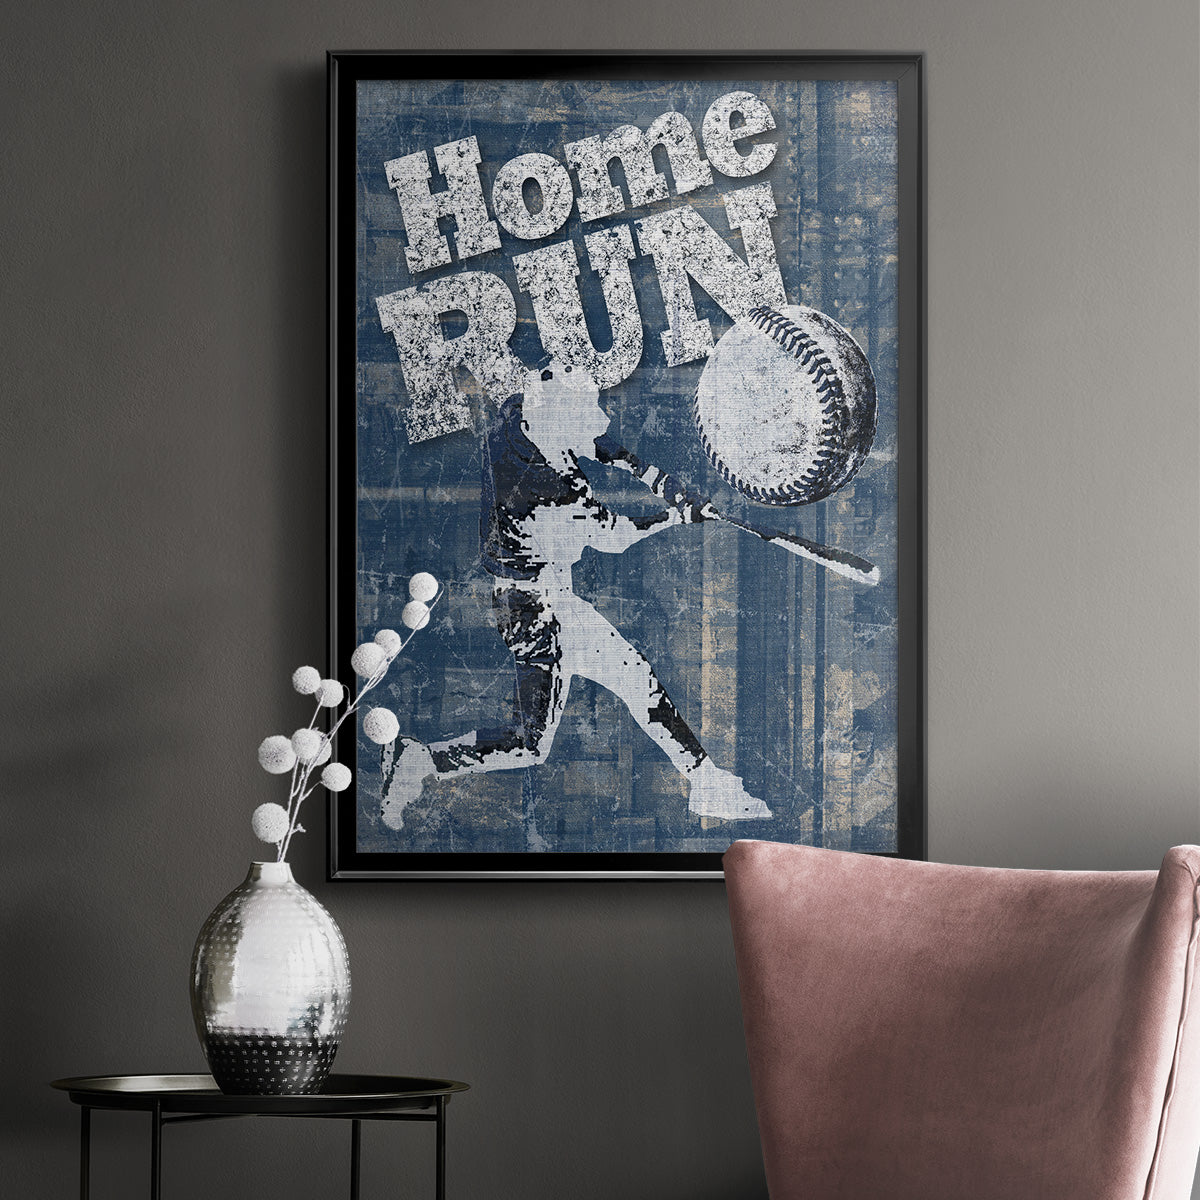 Home Run Hitter Premium Framed Print - Ready to Hang